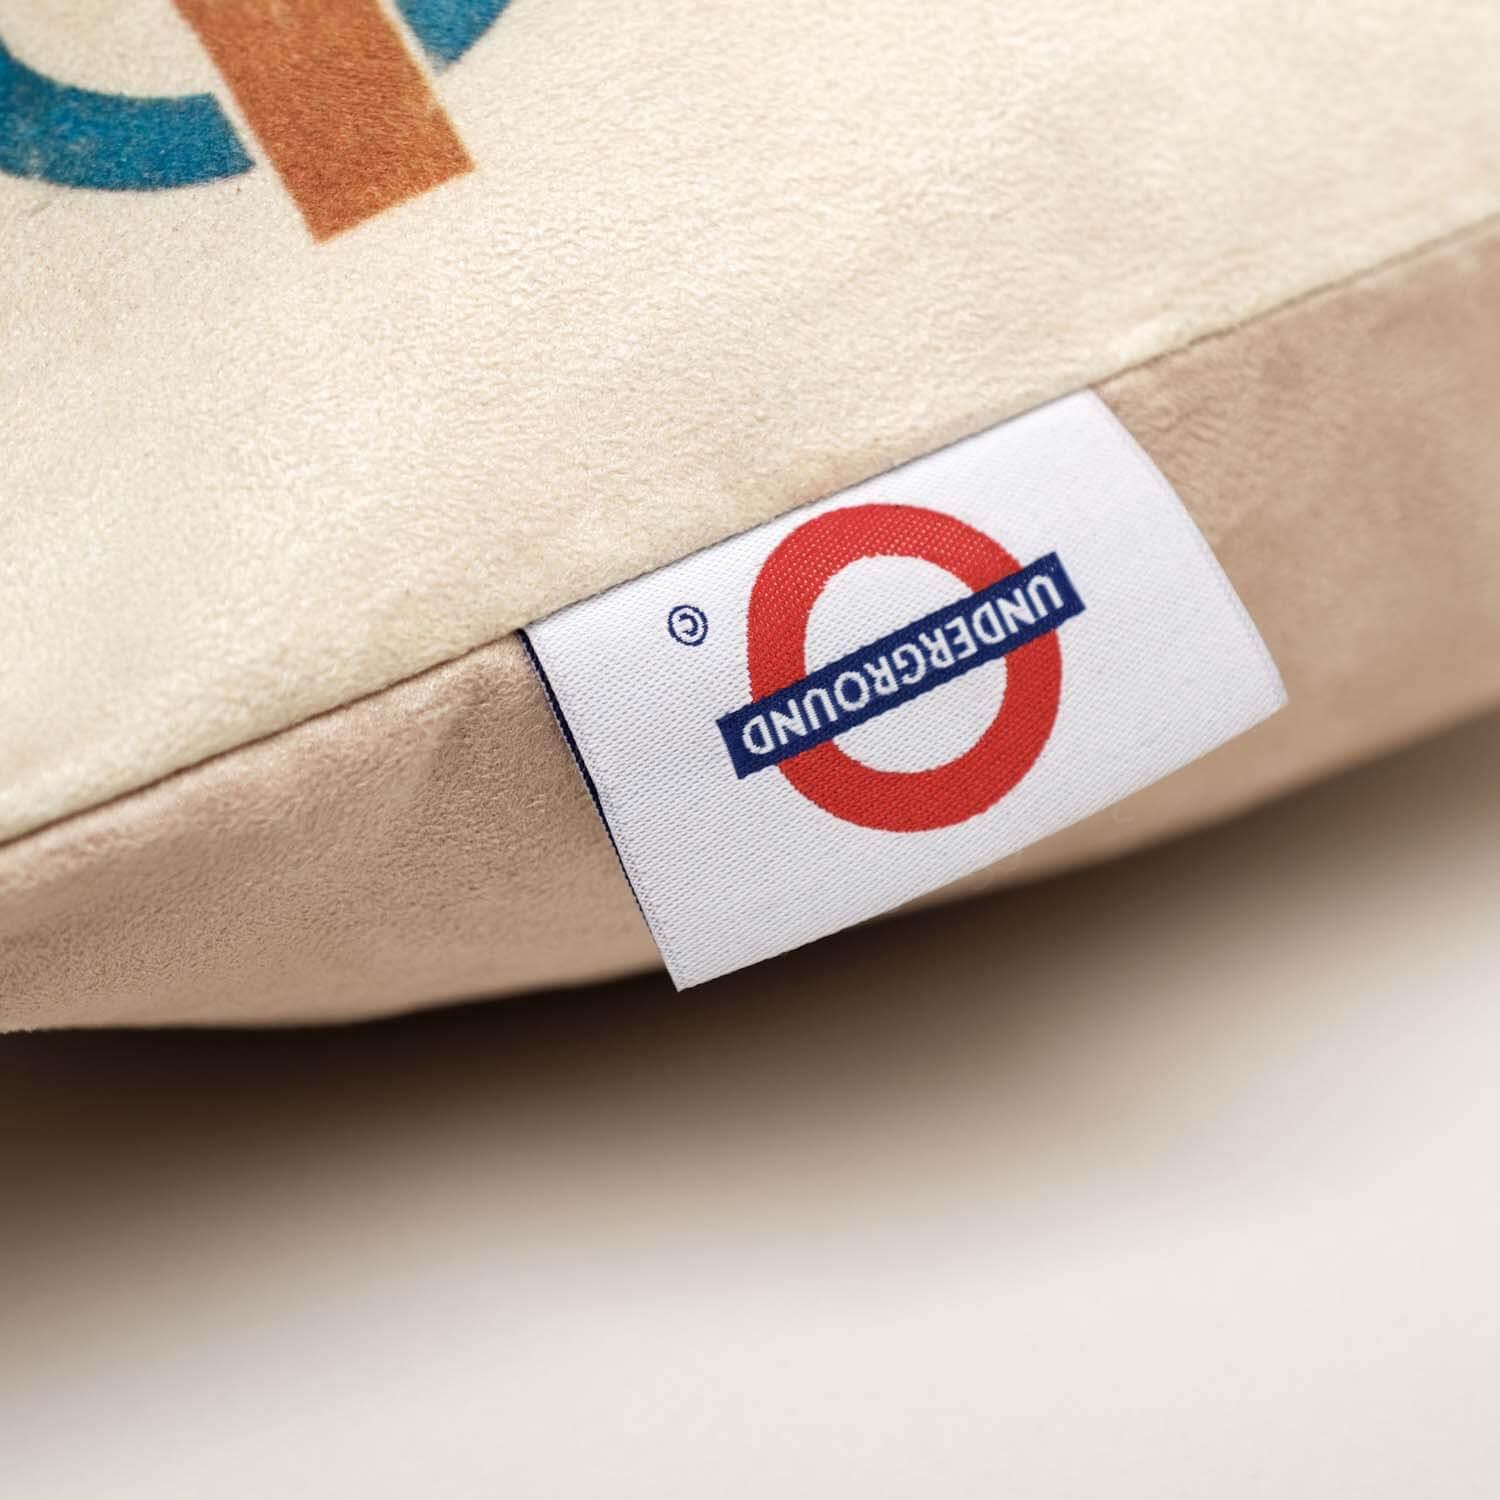 Uxbridge - London Transport Cushion - Handmade Cushions UK - WeLoveCushions